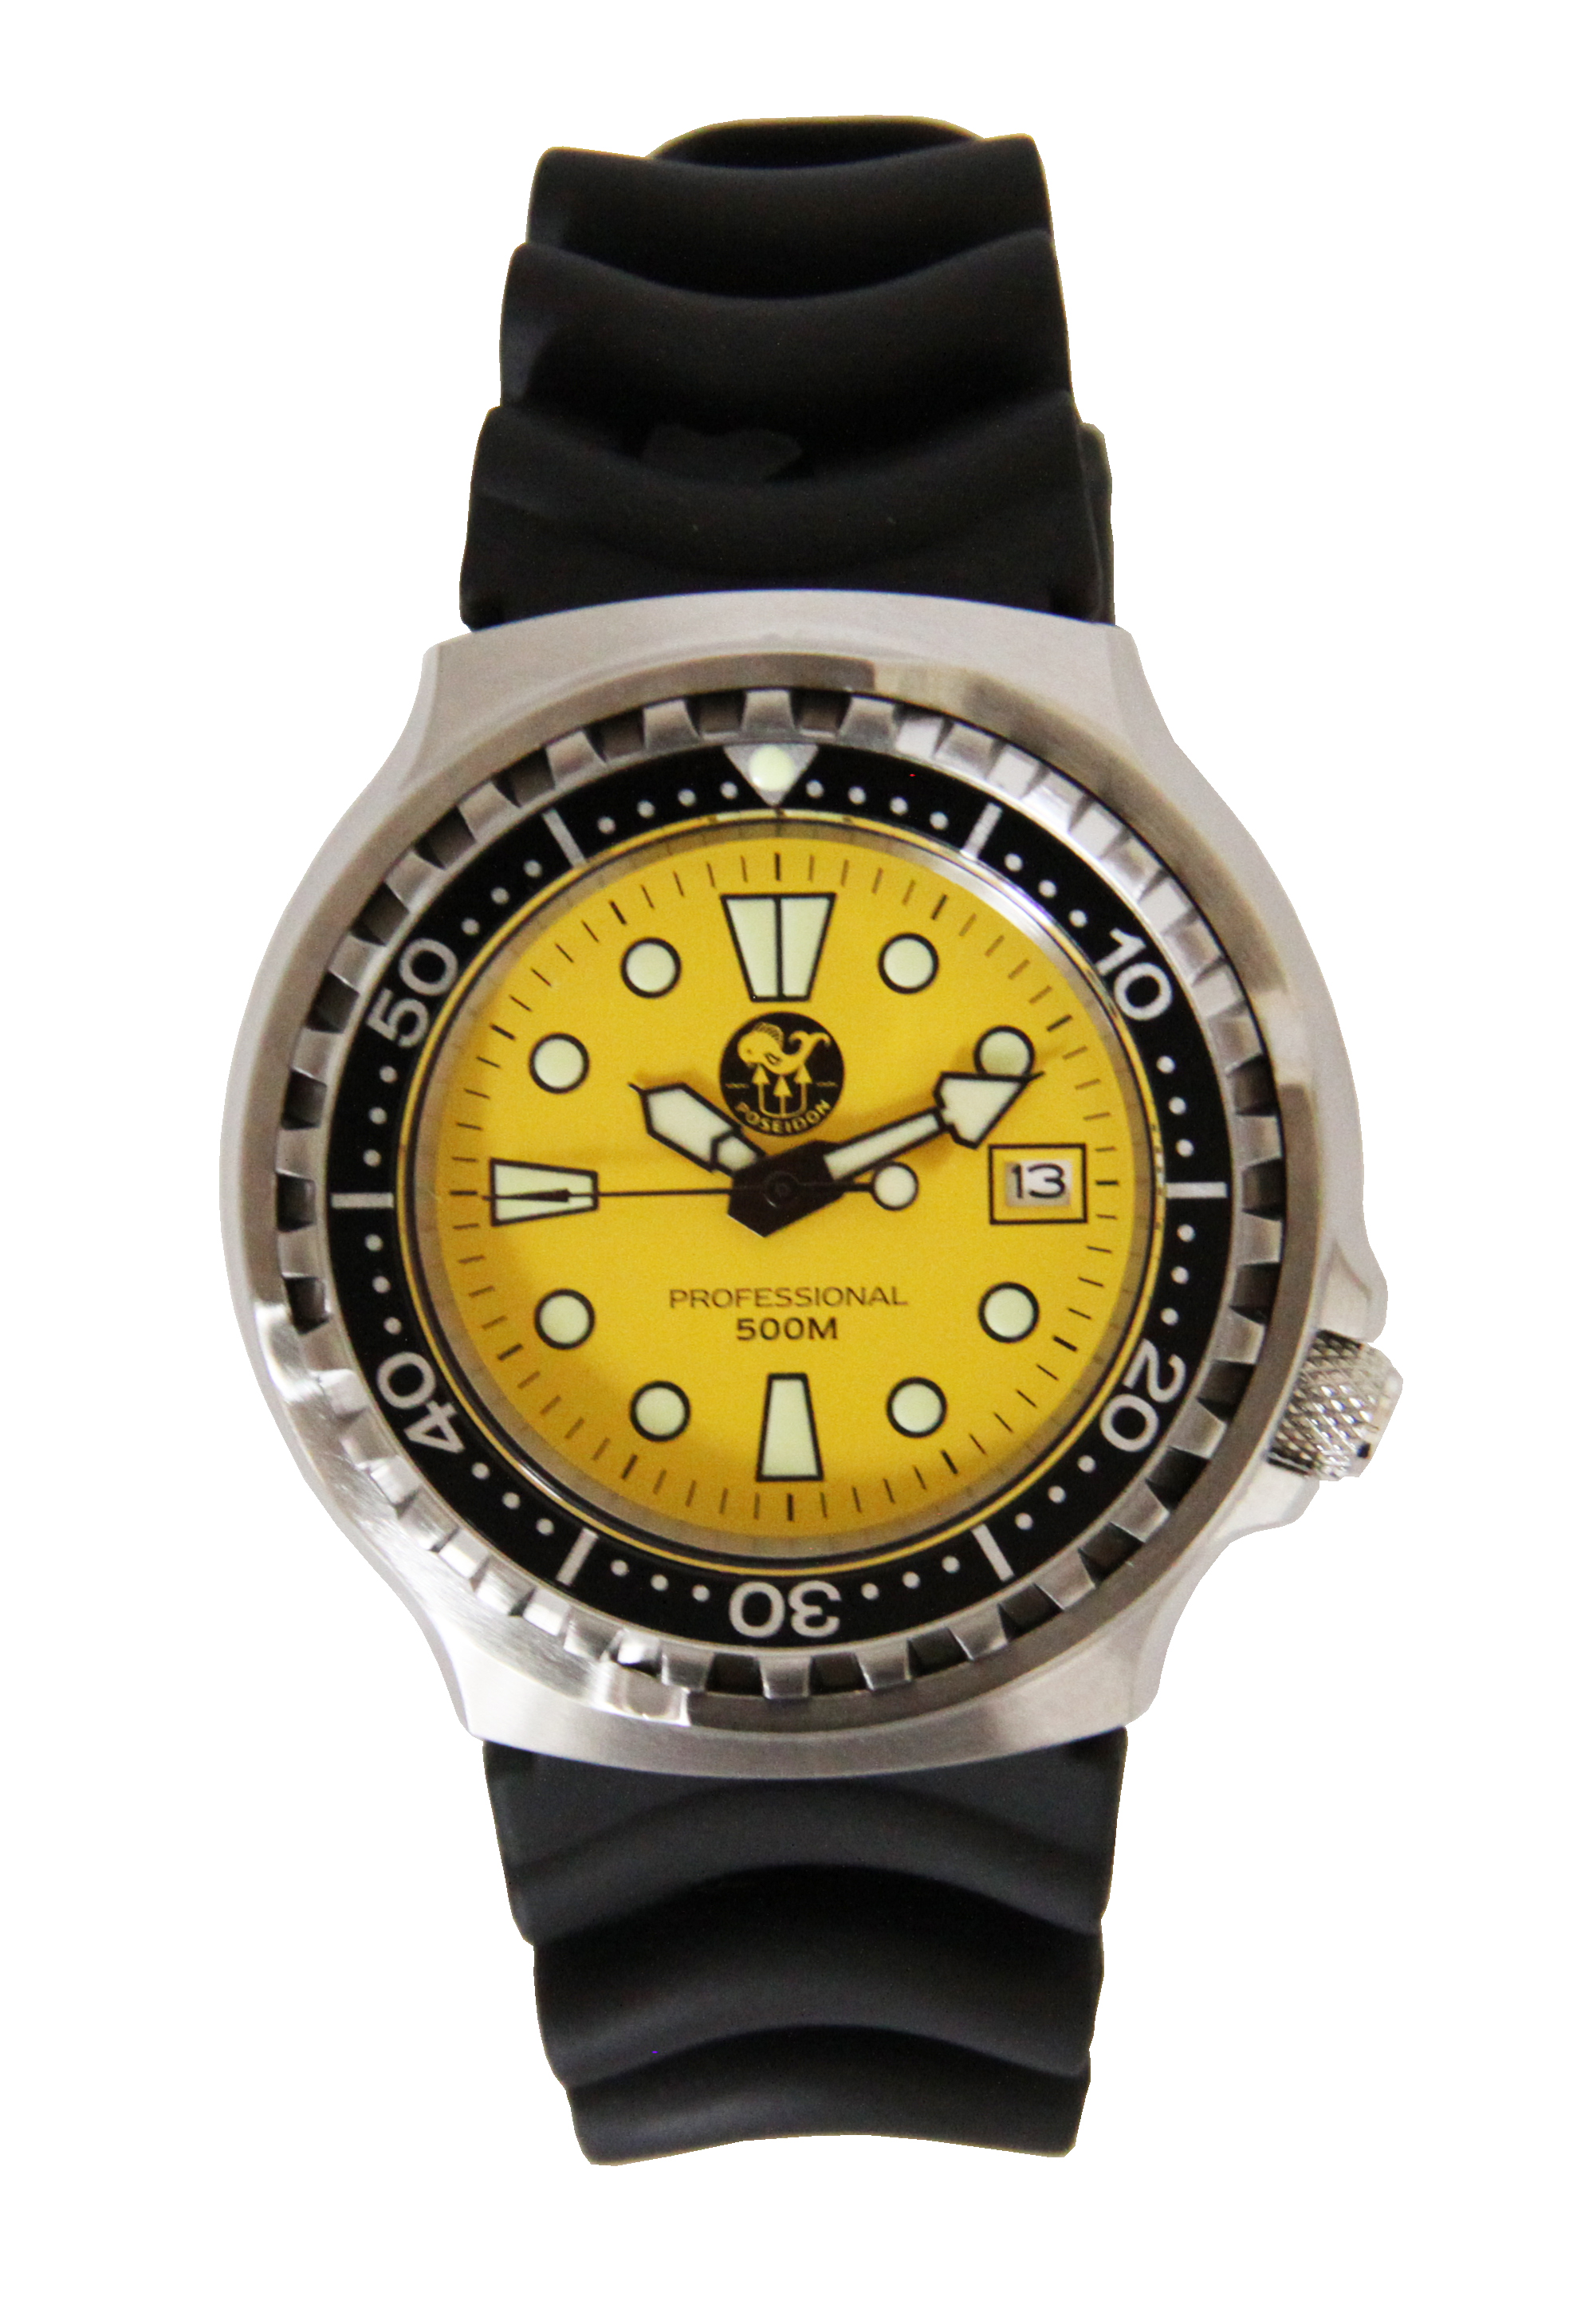 Dive Watch Professional 500m, YW